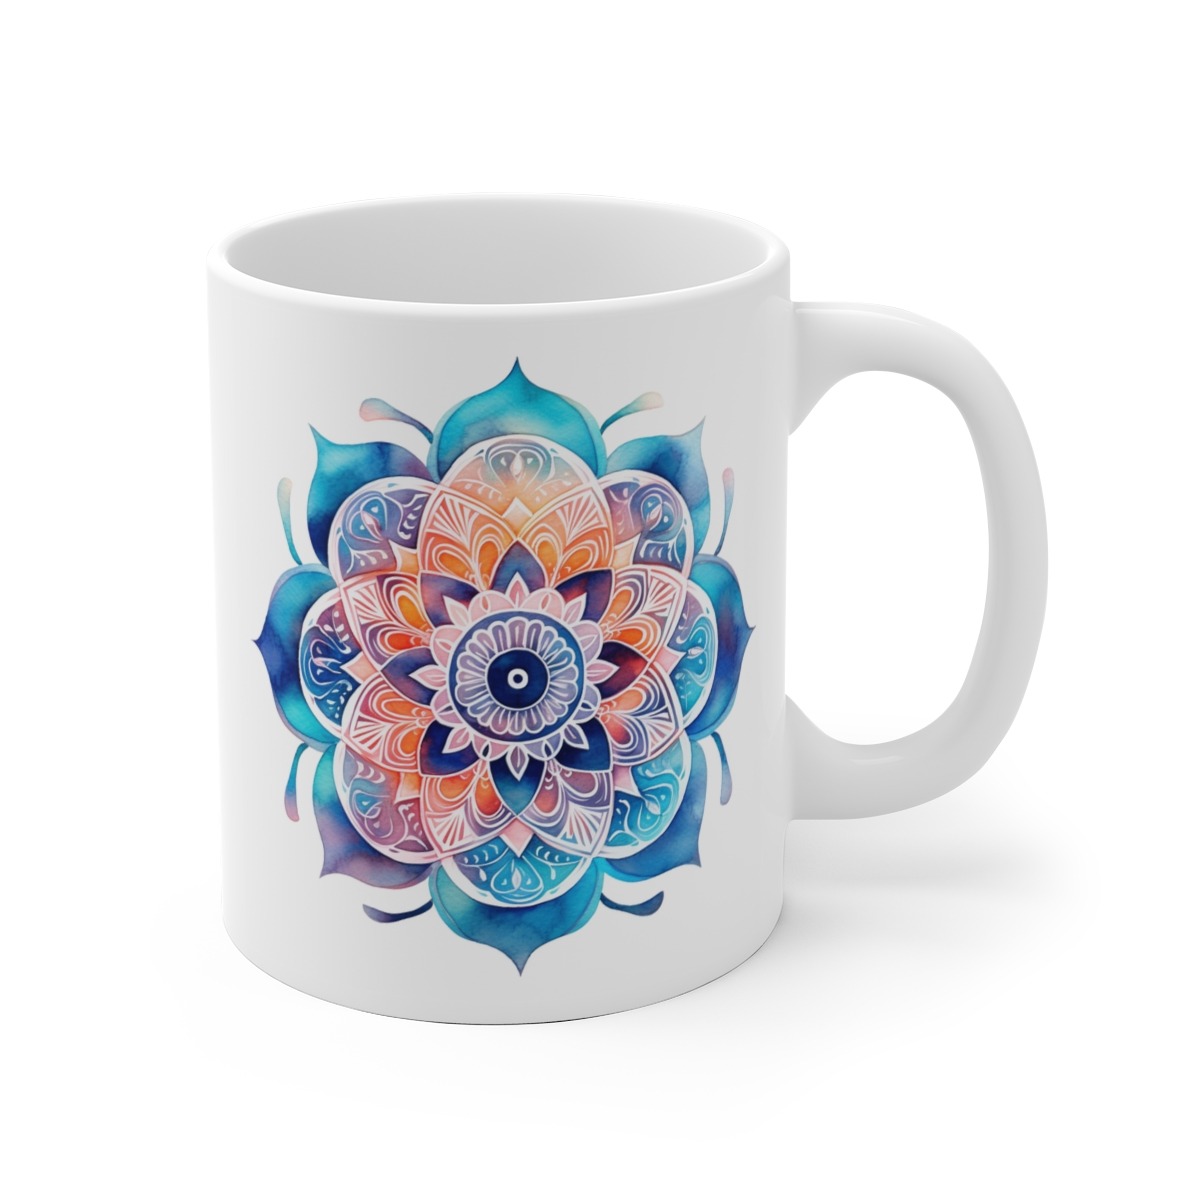 Mandala-Tasse mit Lebensblume-Design